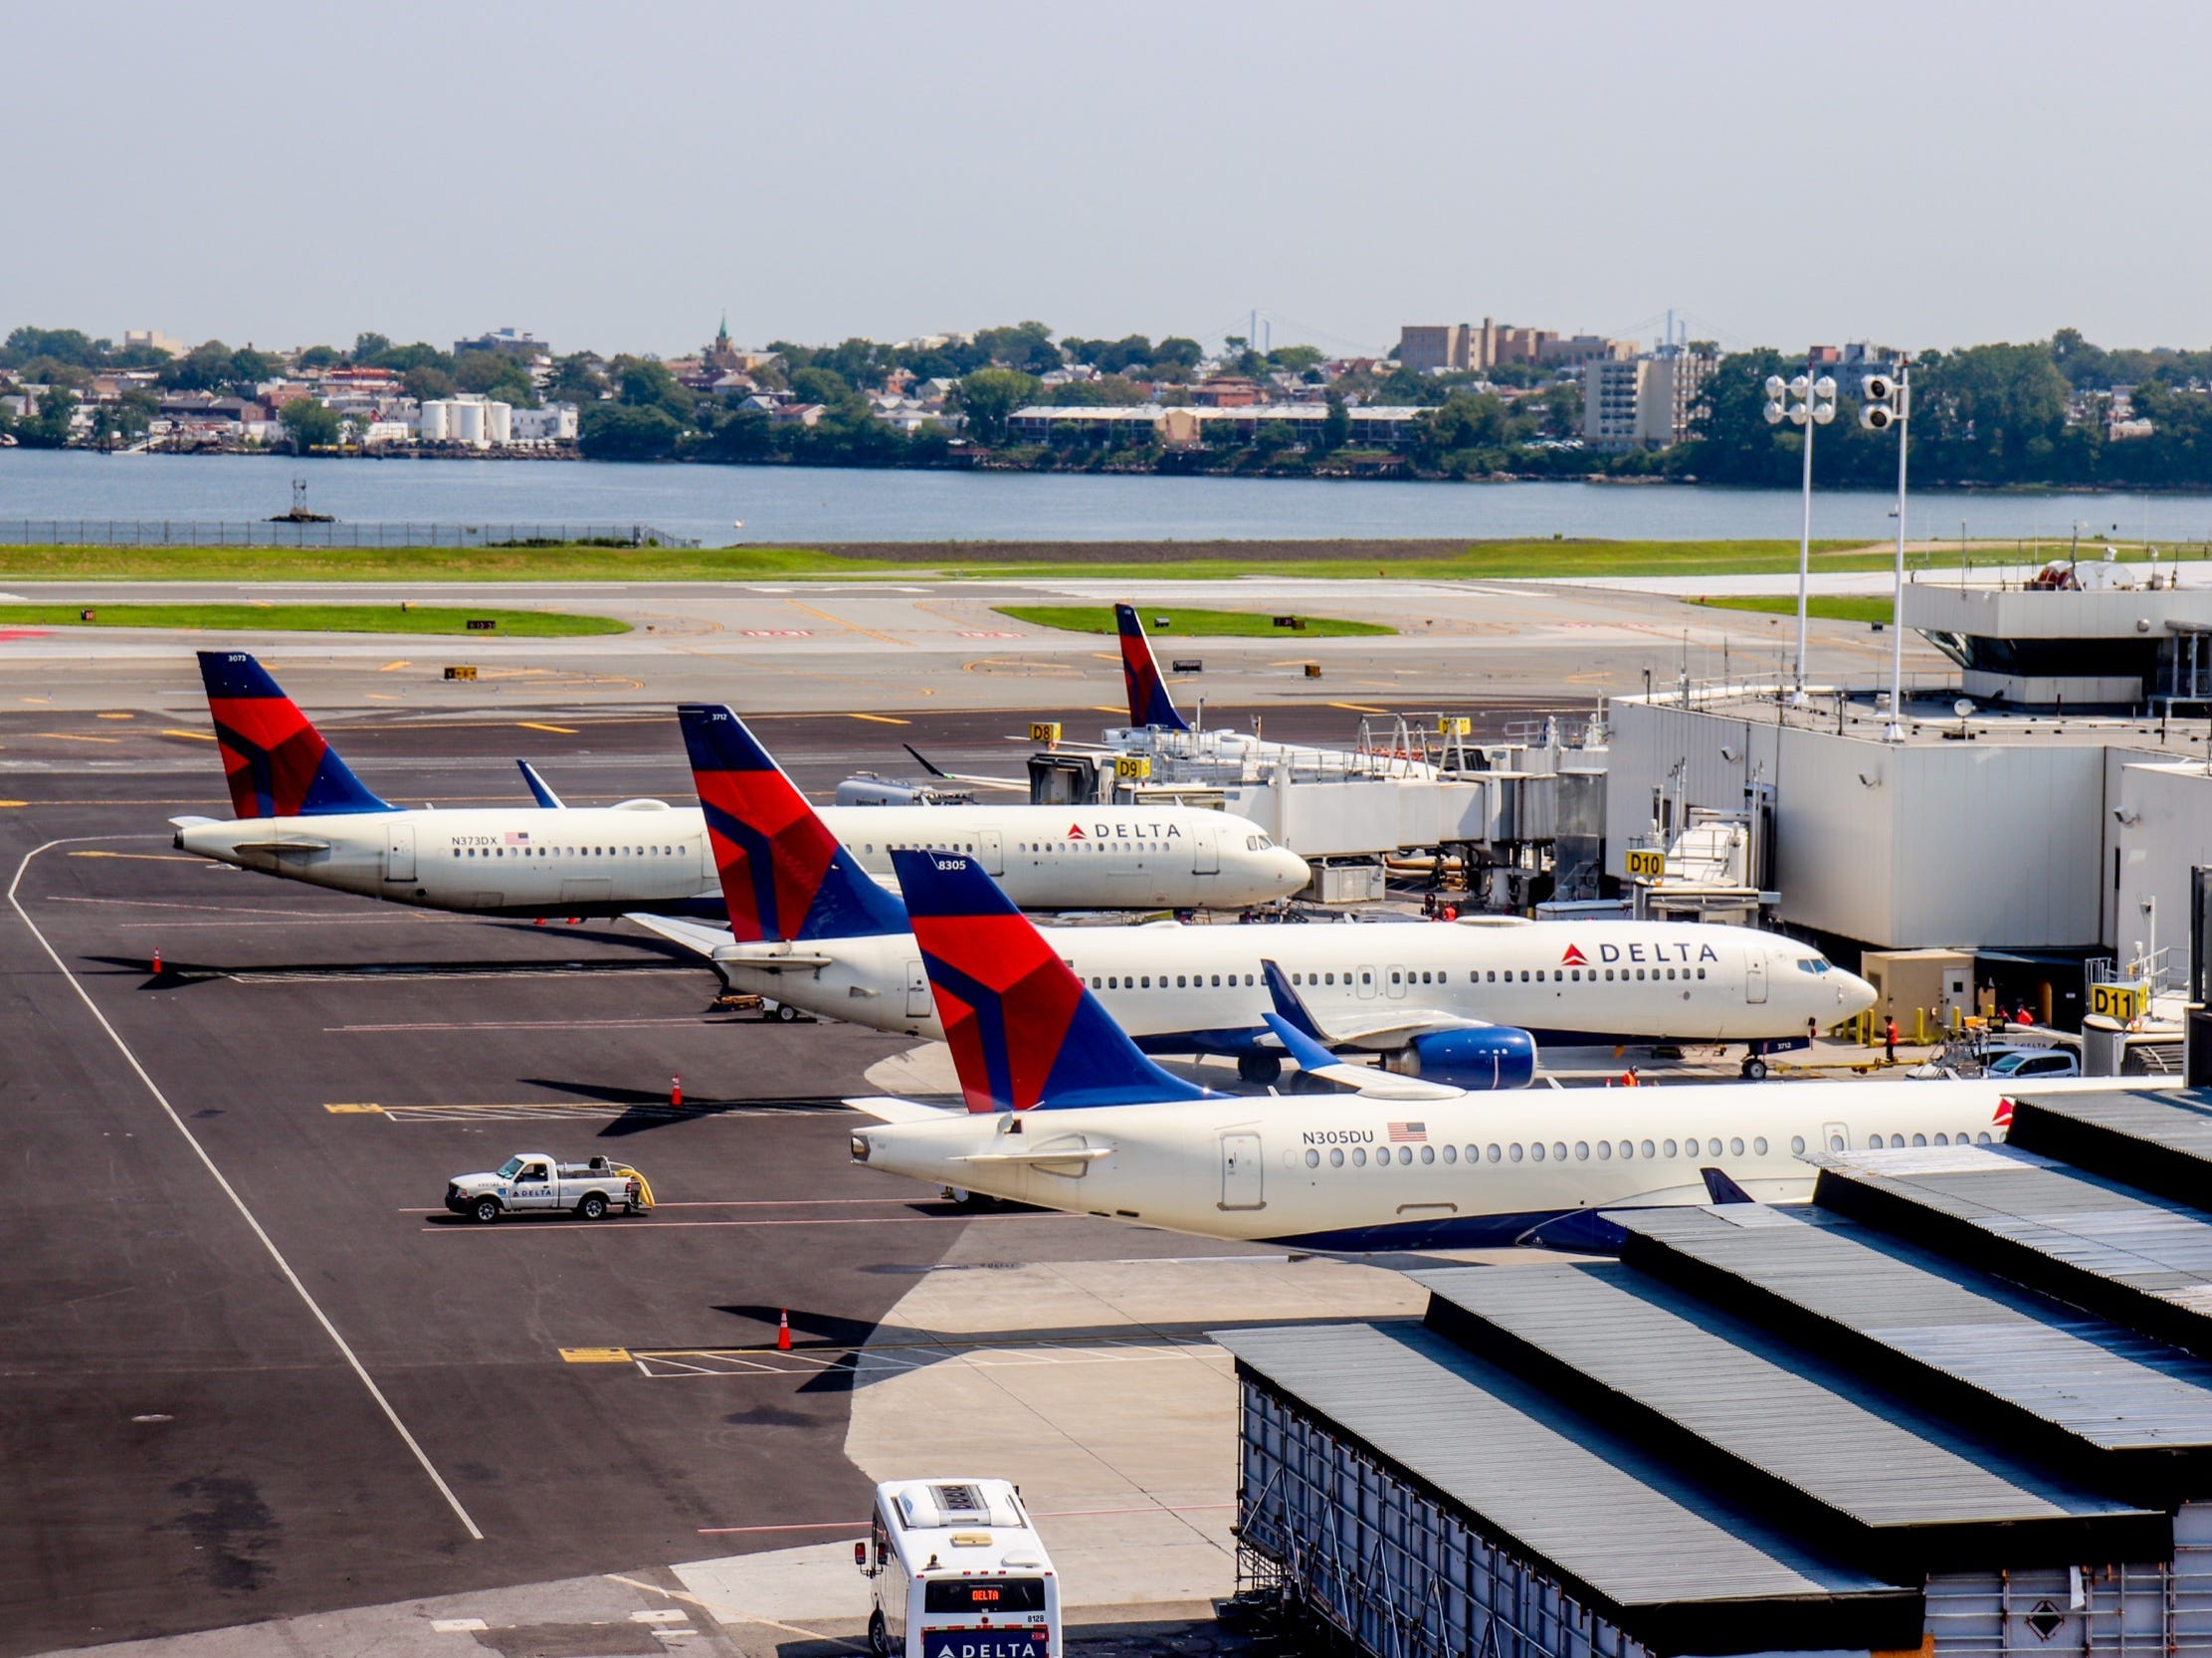 Touring Delta Air Lines' new terminal at LaGuardia Airport  - Delta Hard Hat Tour 2021